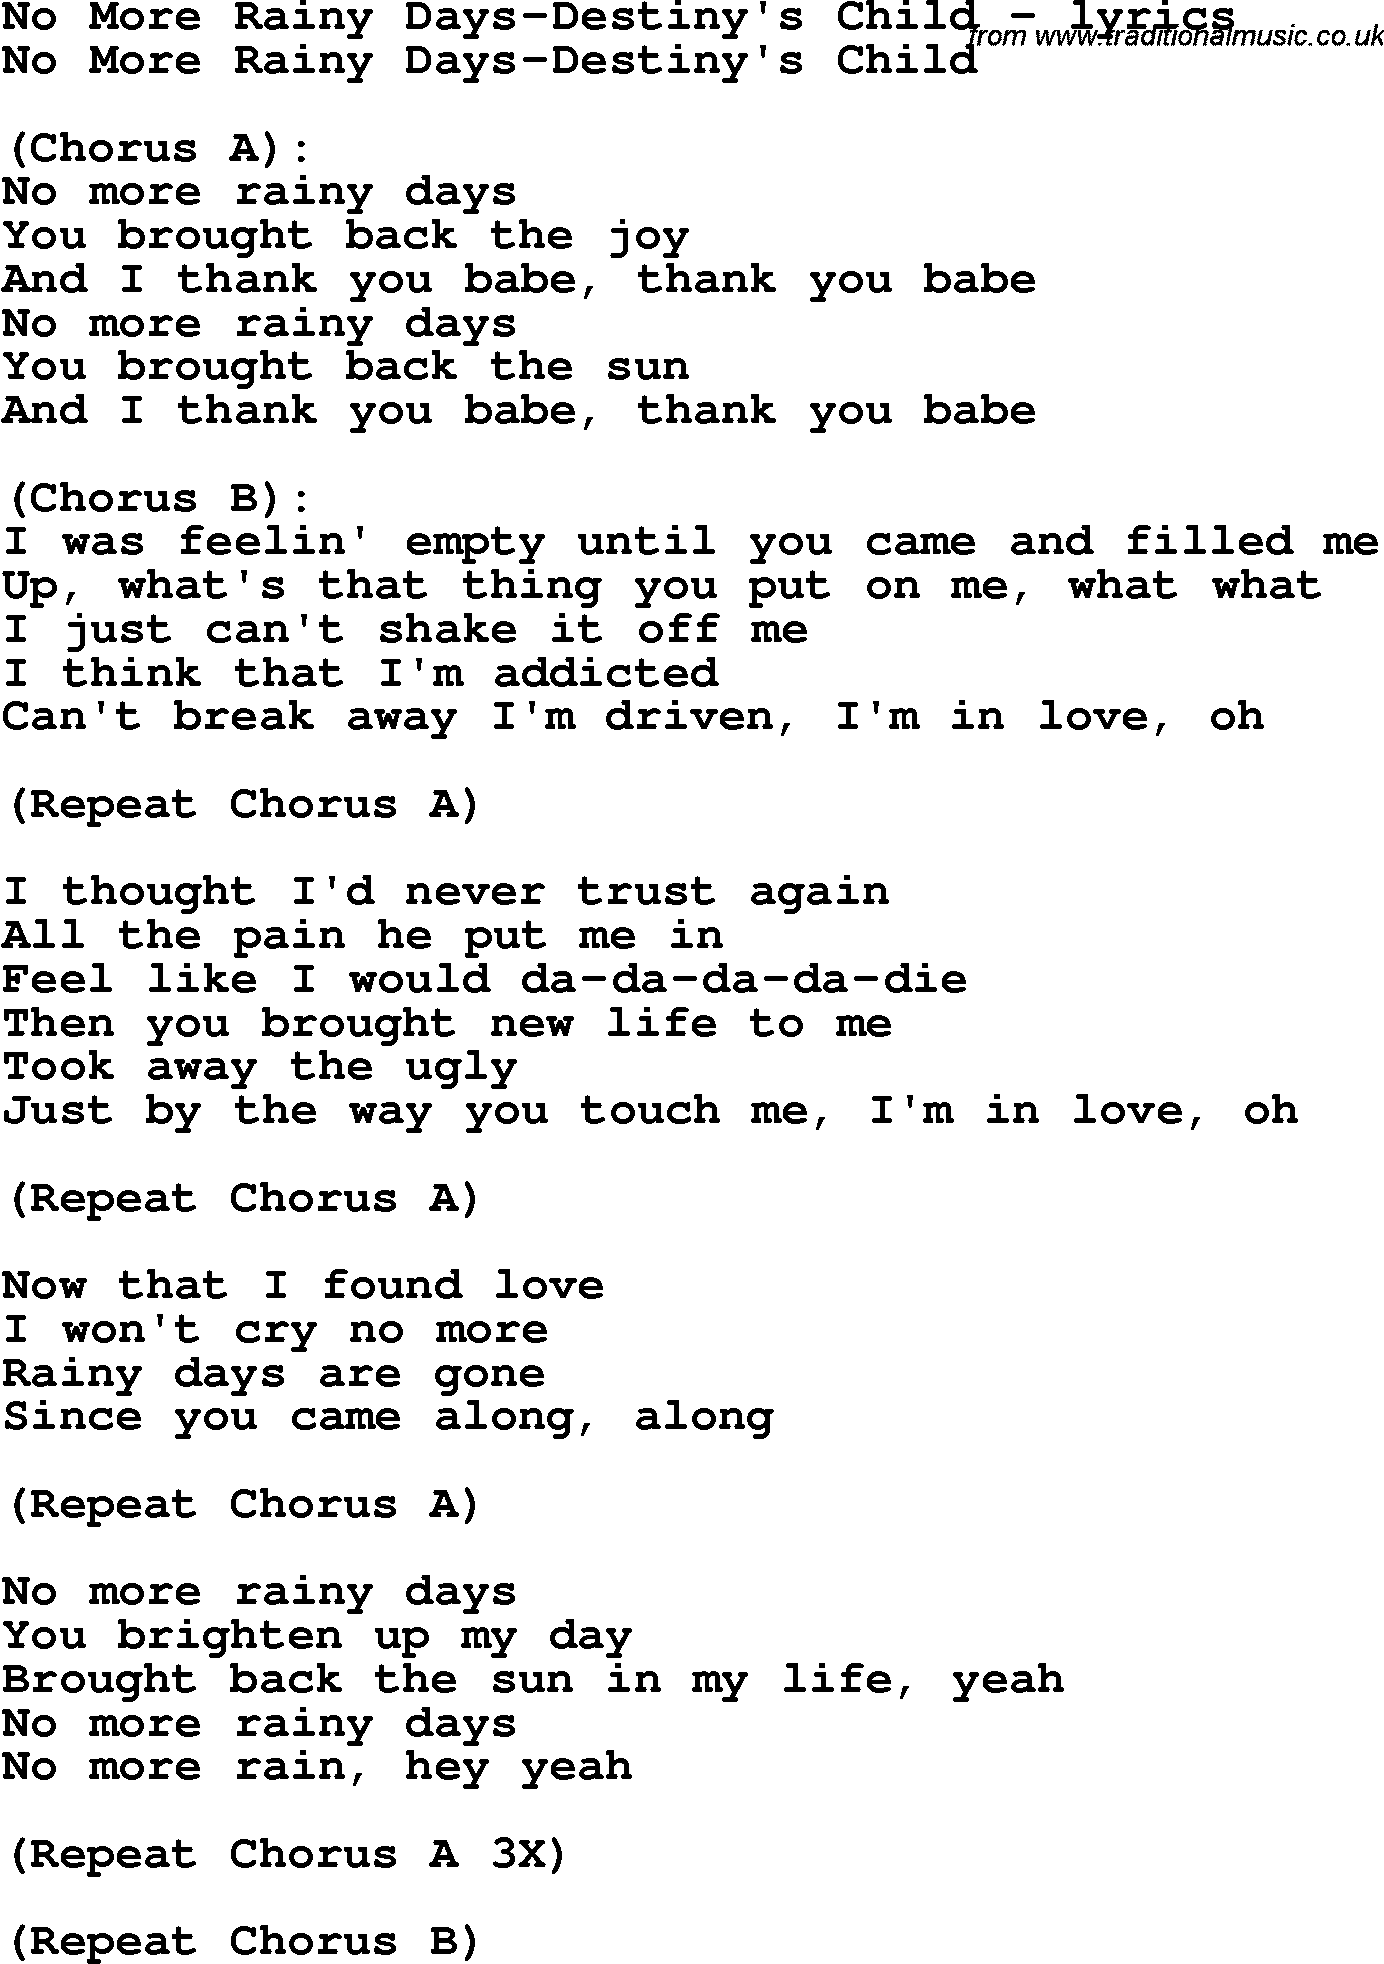 Love Song Lyrics For No More Rainy Days Destiny S Child